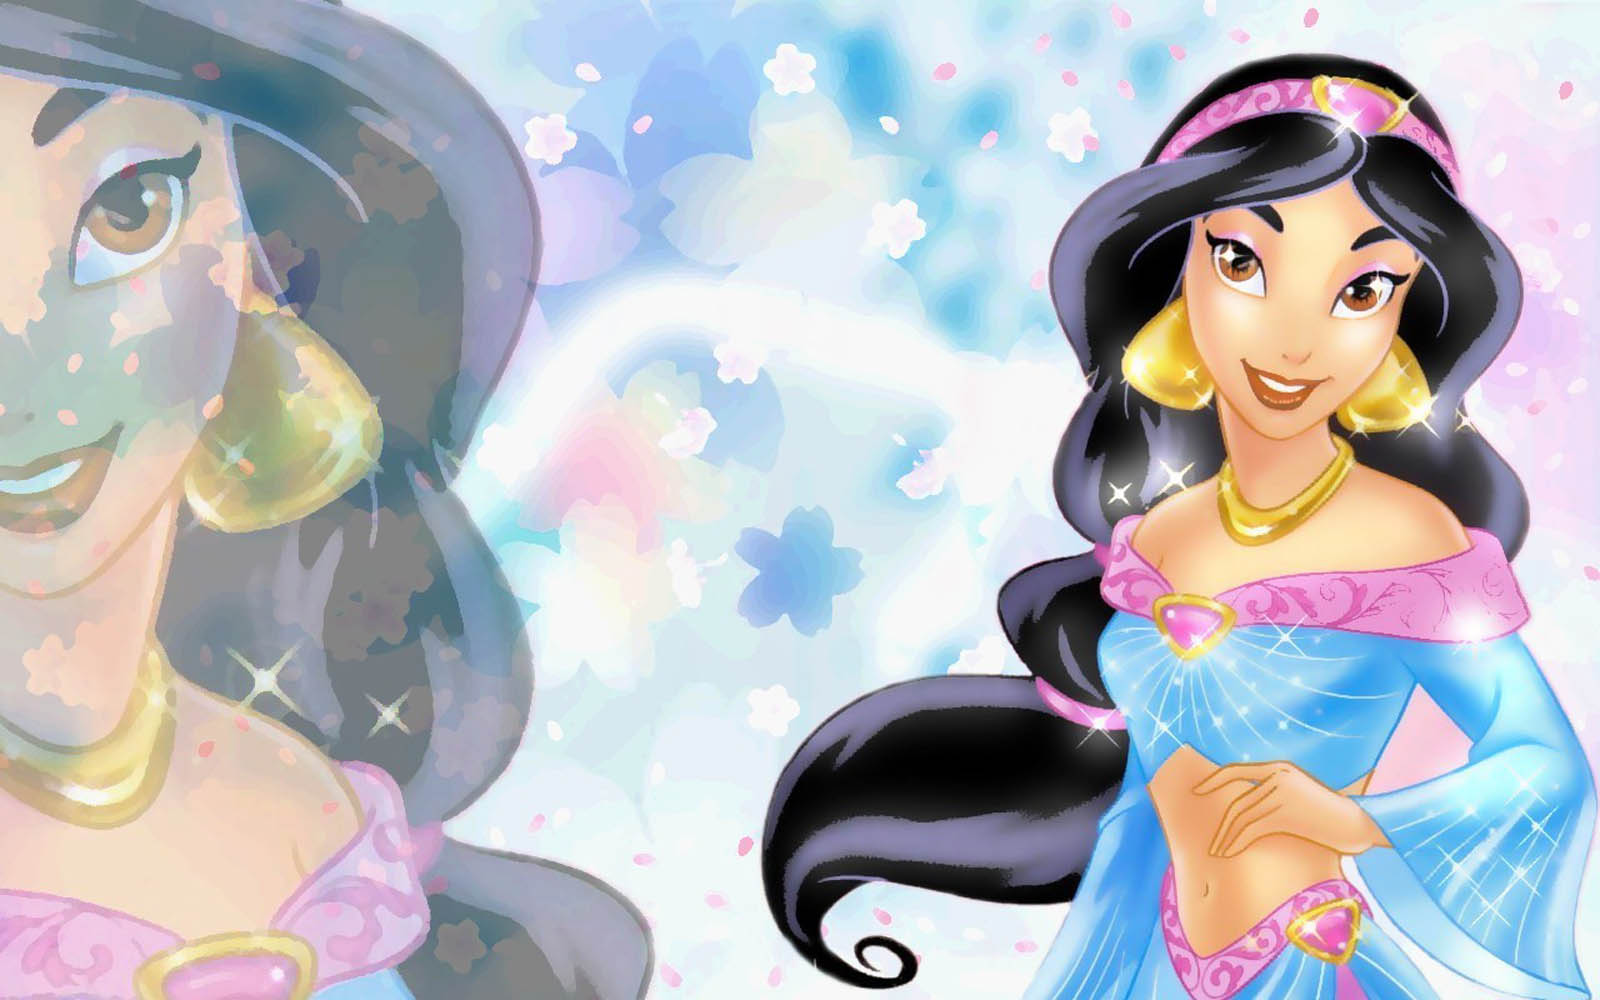 Wallpaper Disney Princess Jasmine